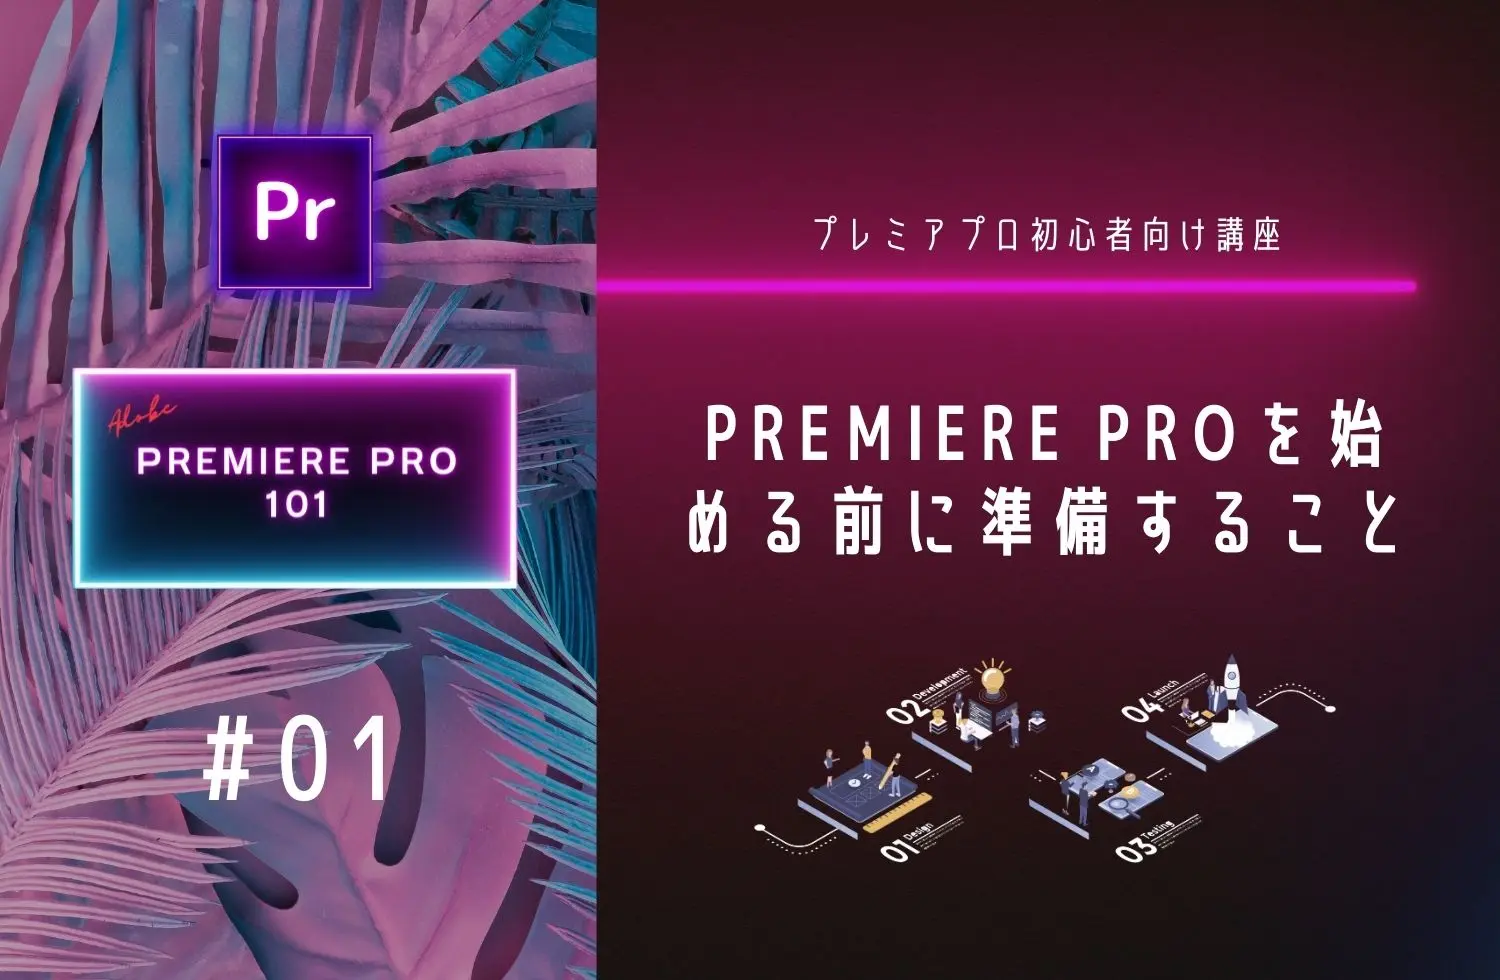 Premiere Proを始める前に準備すること - hifiv Blog